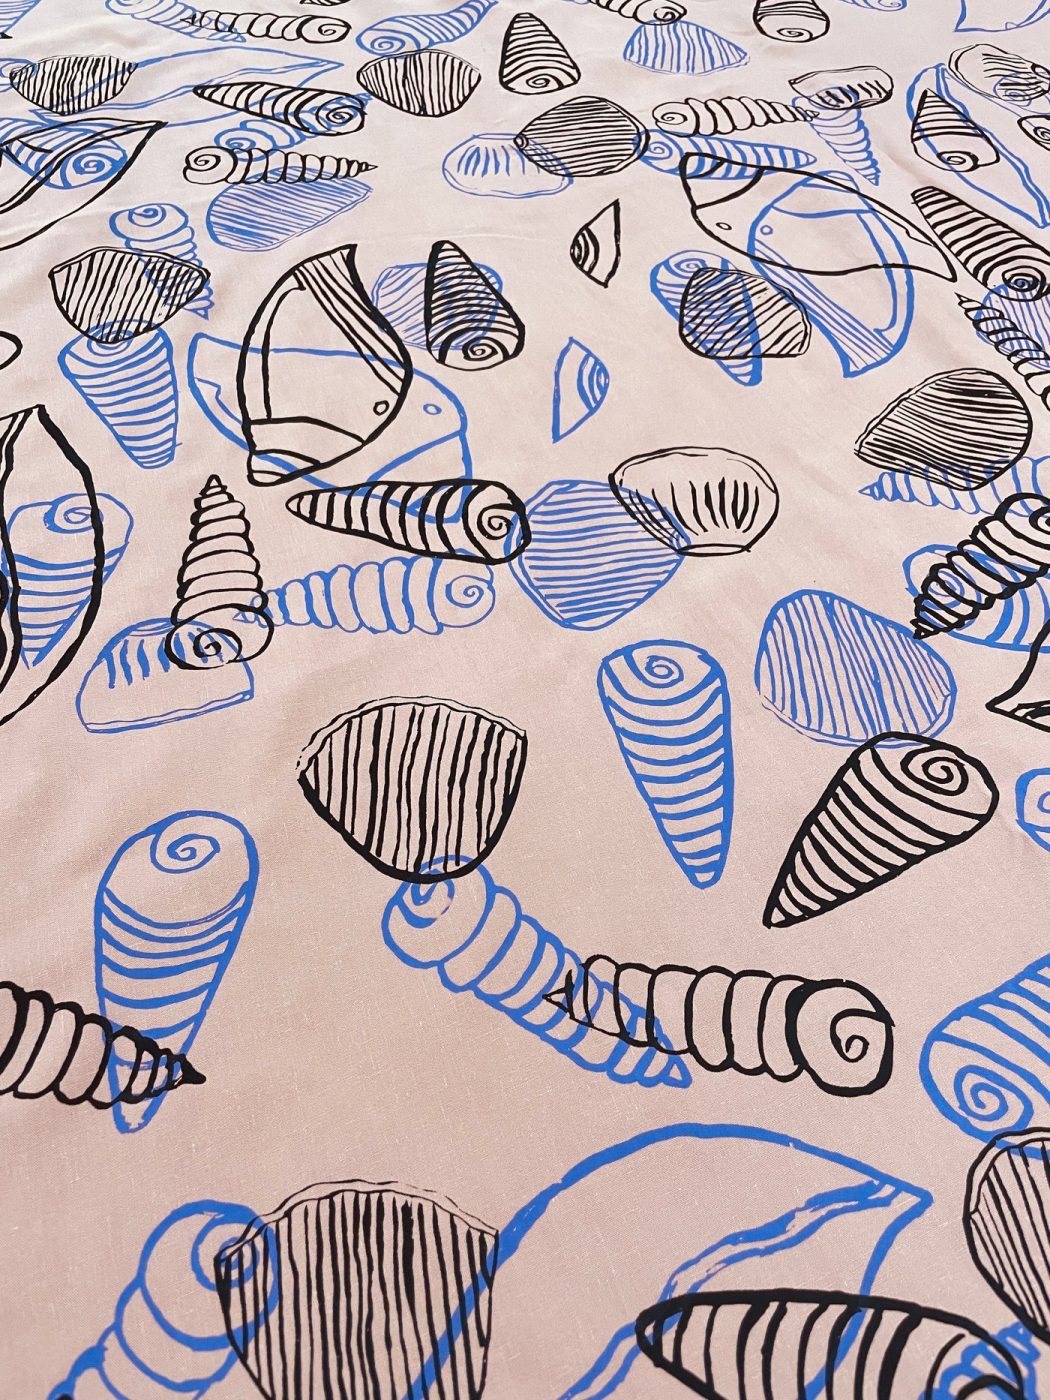 Sea Shells and Dilly Bags by Belinda Kernan